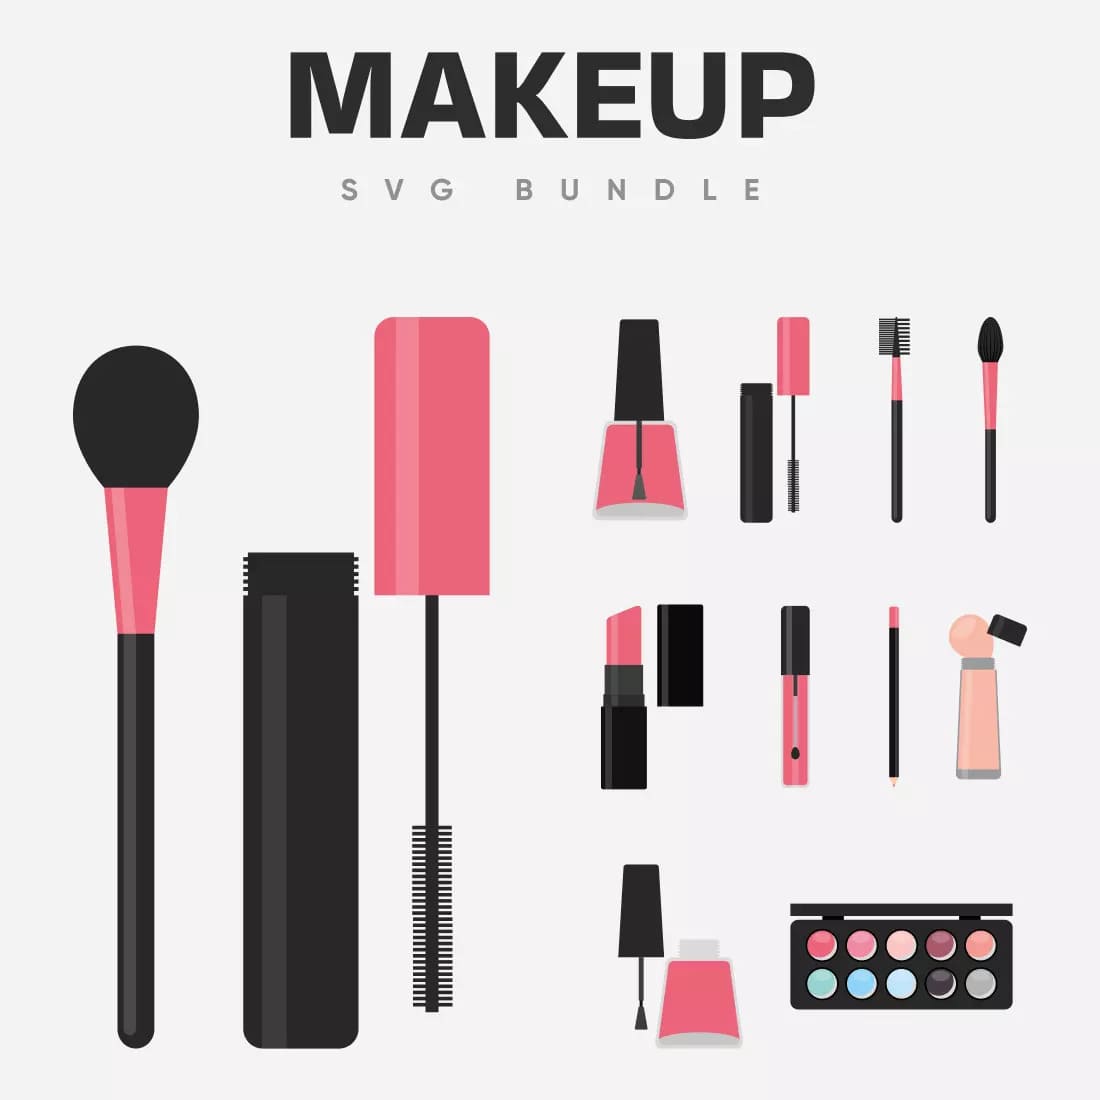 Makeup SVG Bundle Preview 4.